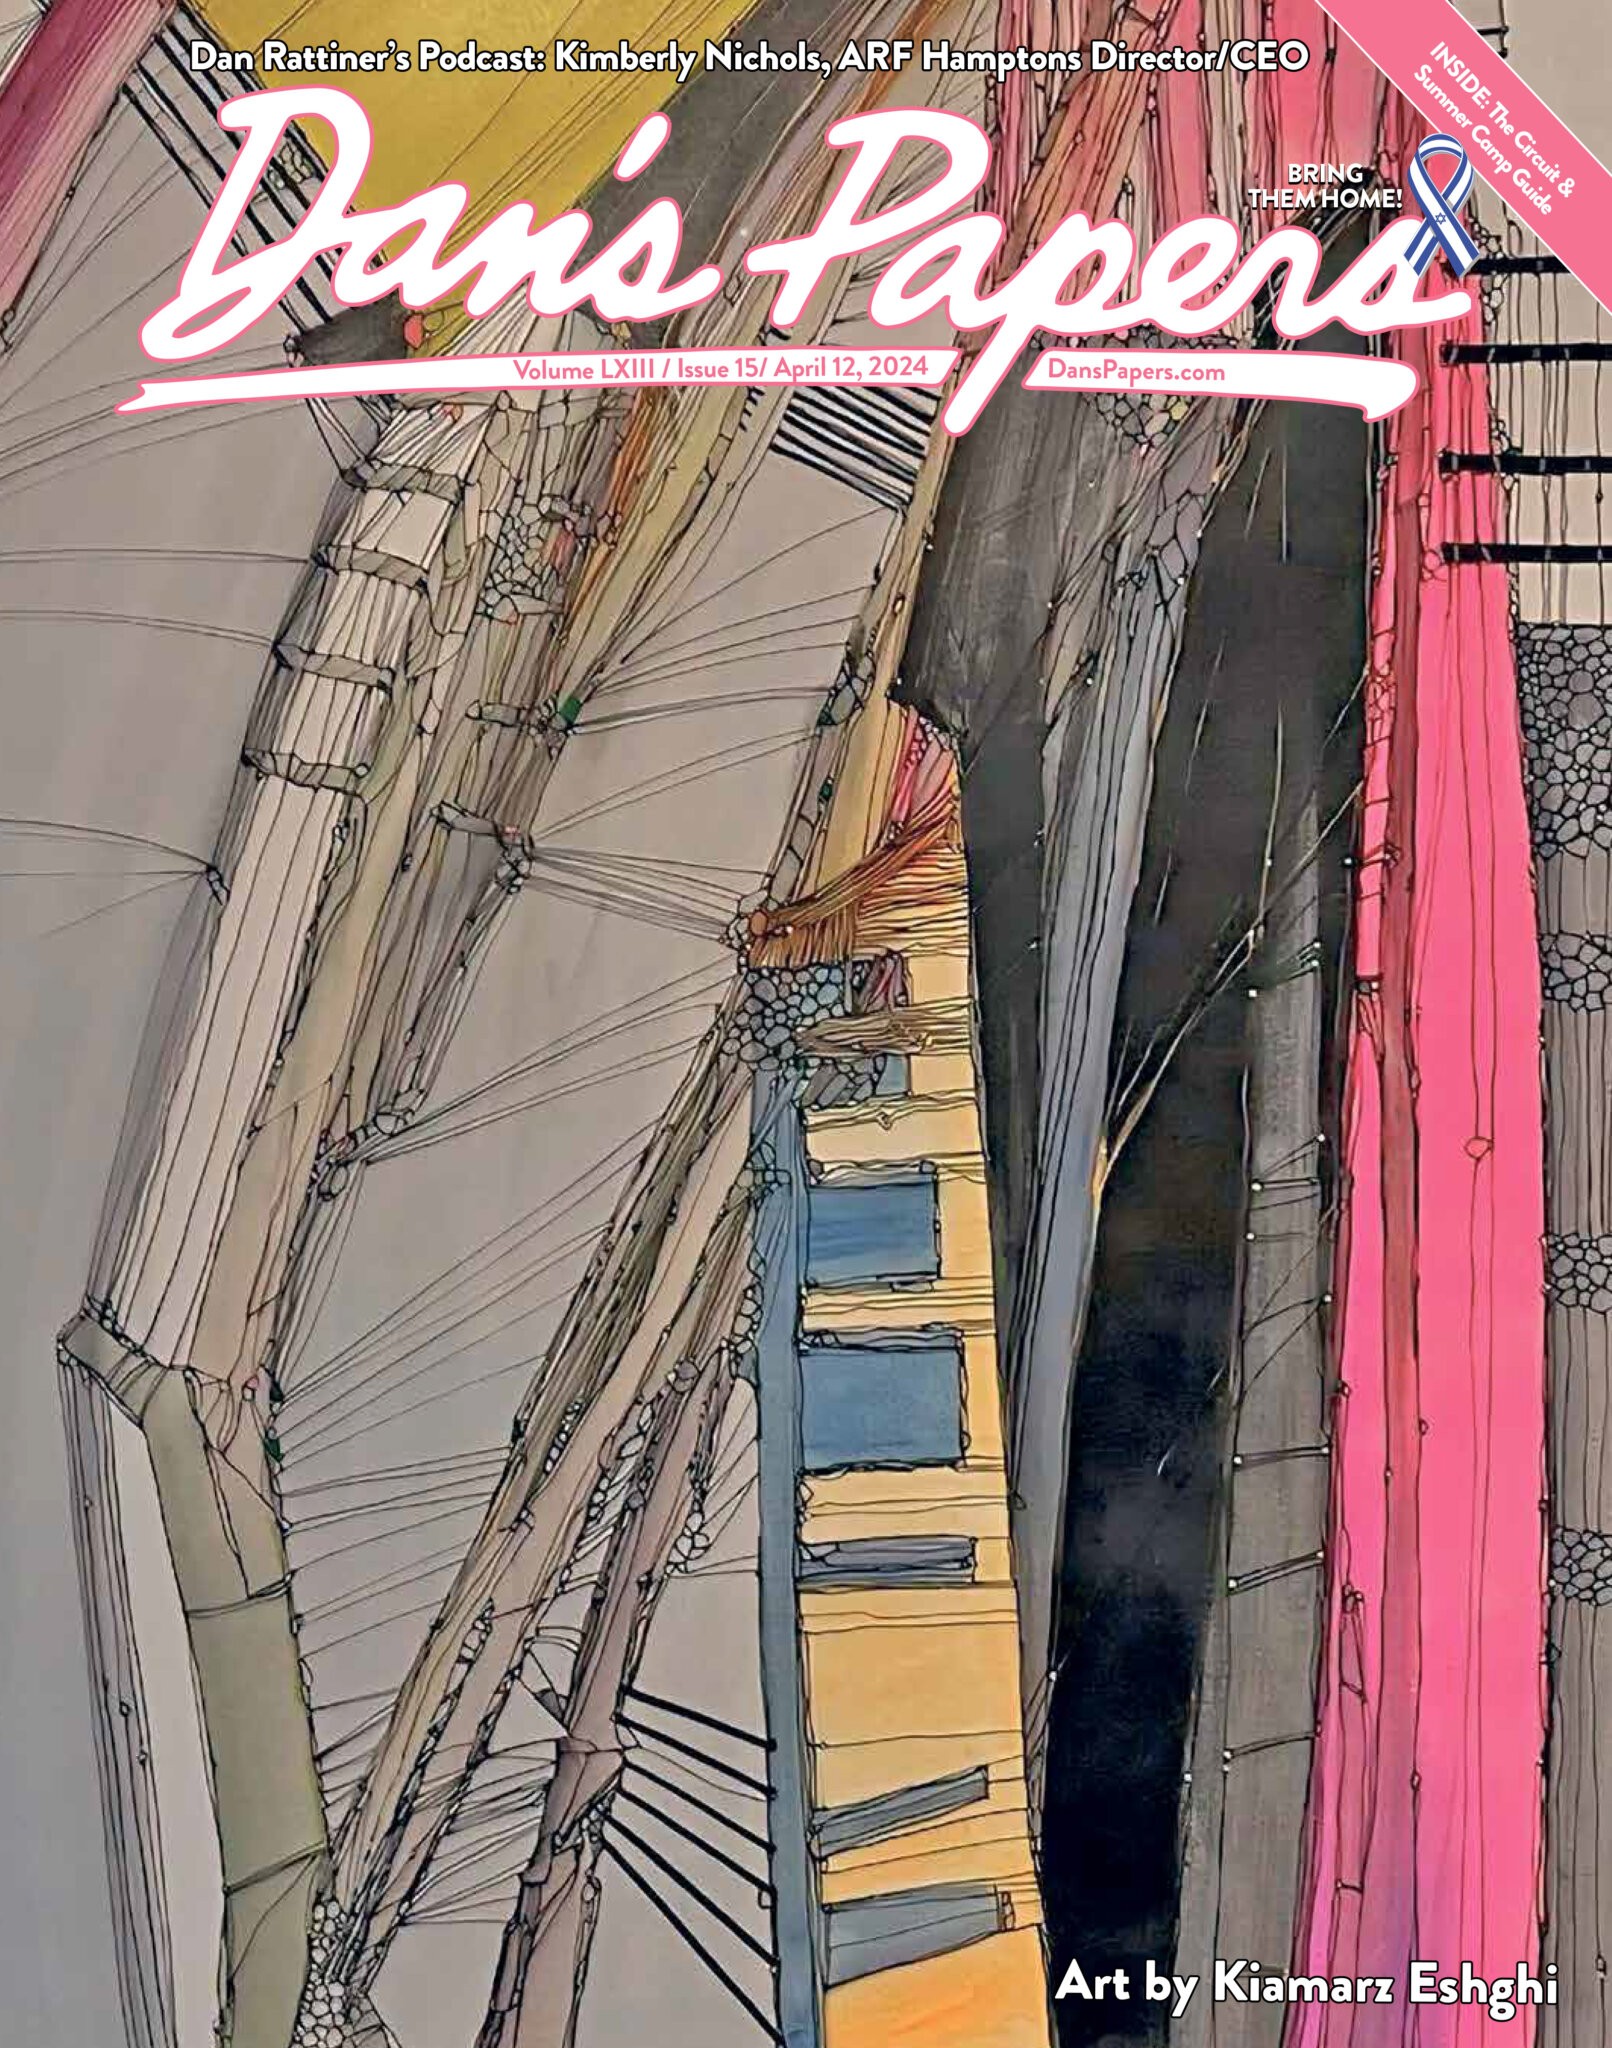 Apr 12, 2024 Dan's Papers cover by Kiamarz Eshgi